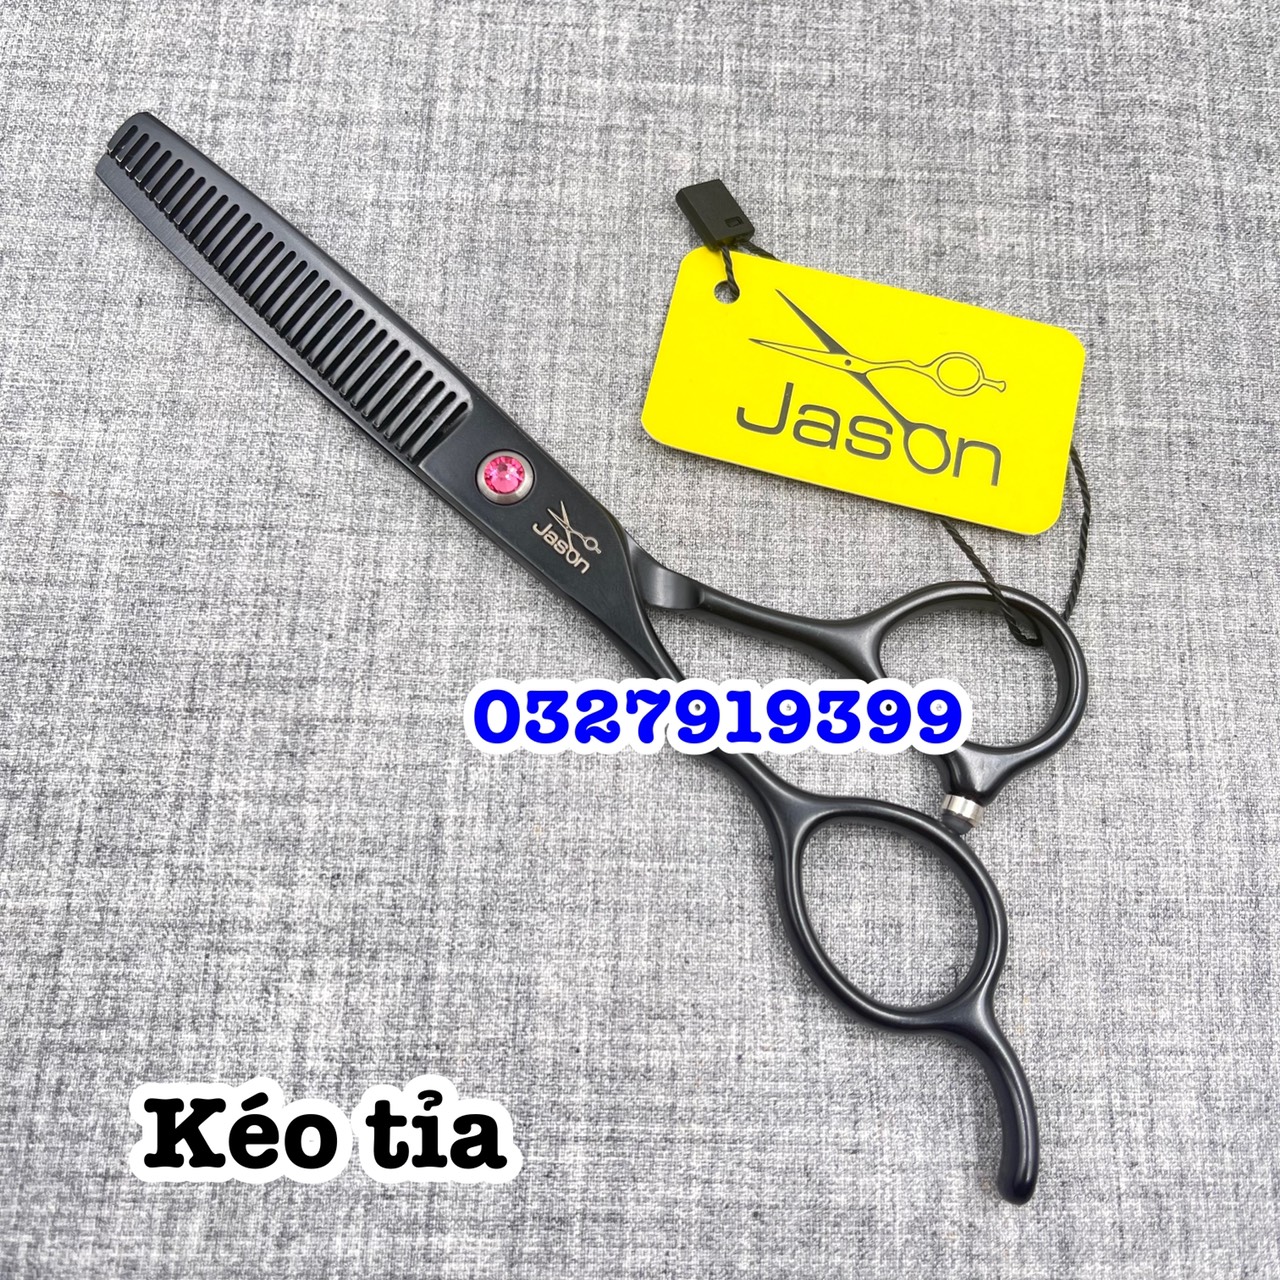 Kéo cắt tóc tay trái JASON 6.0